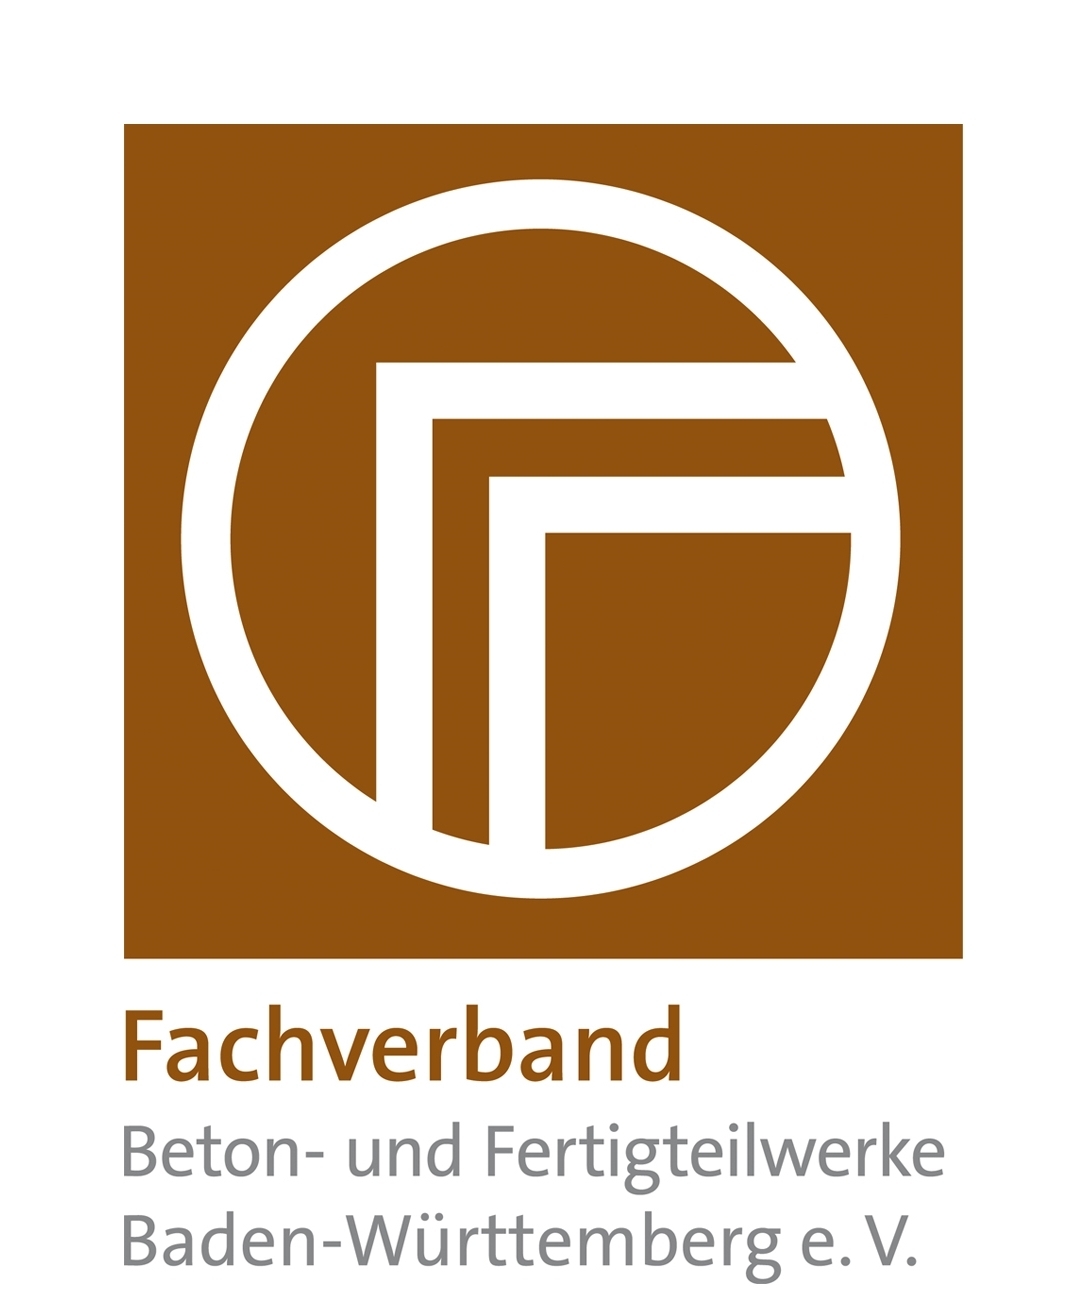 Fachverband Beton- und Fertigteilwerke Baden-Württemberg e. V.